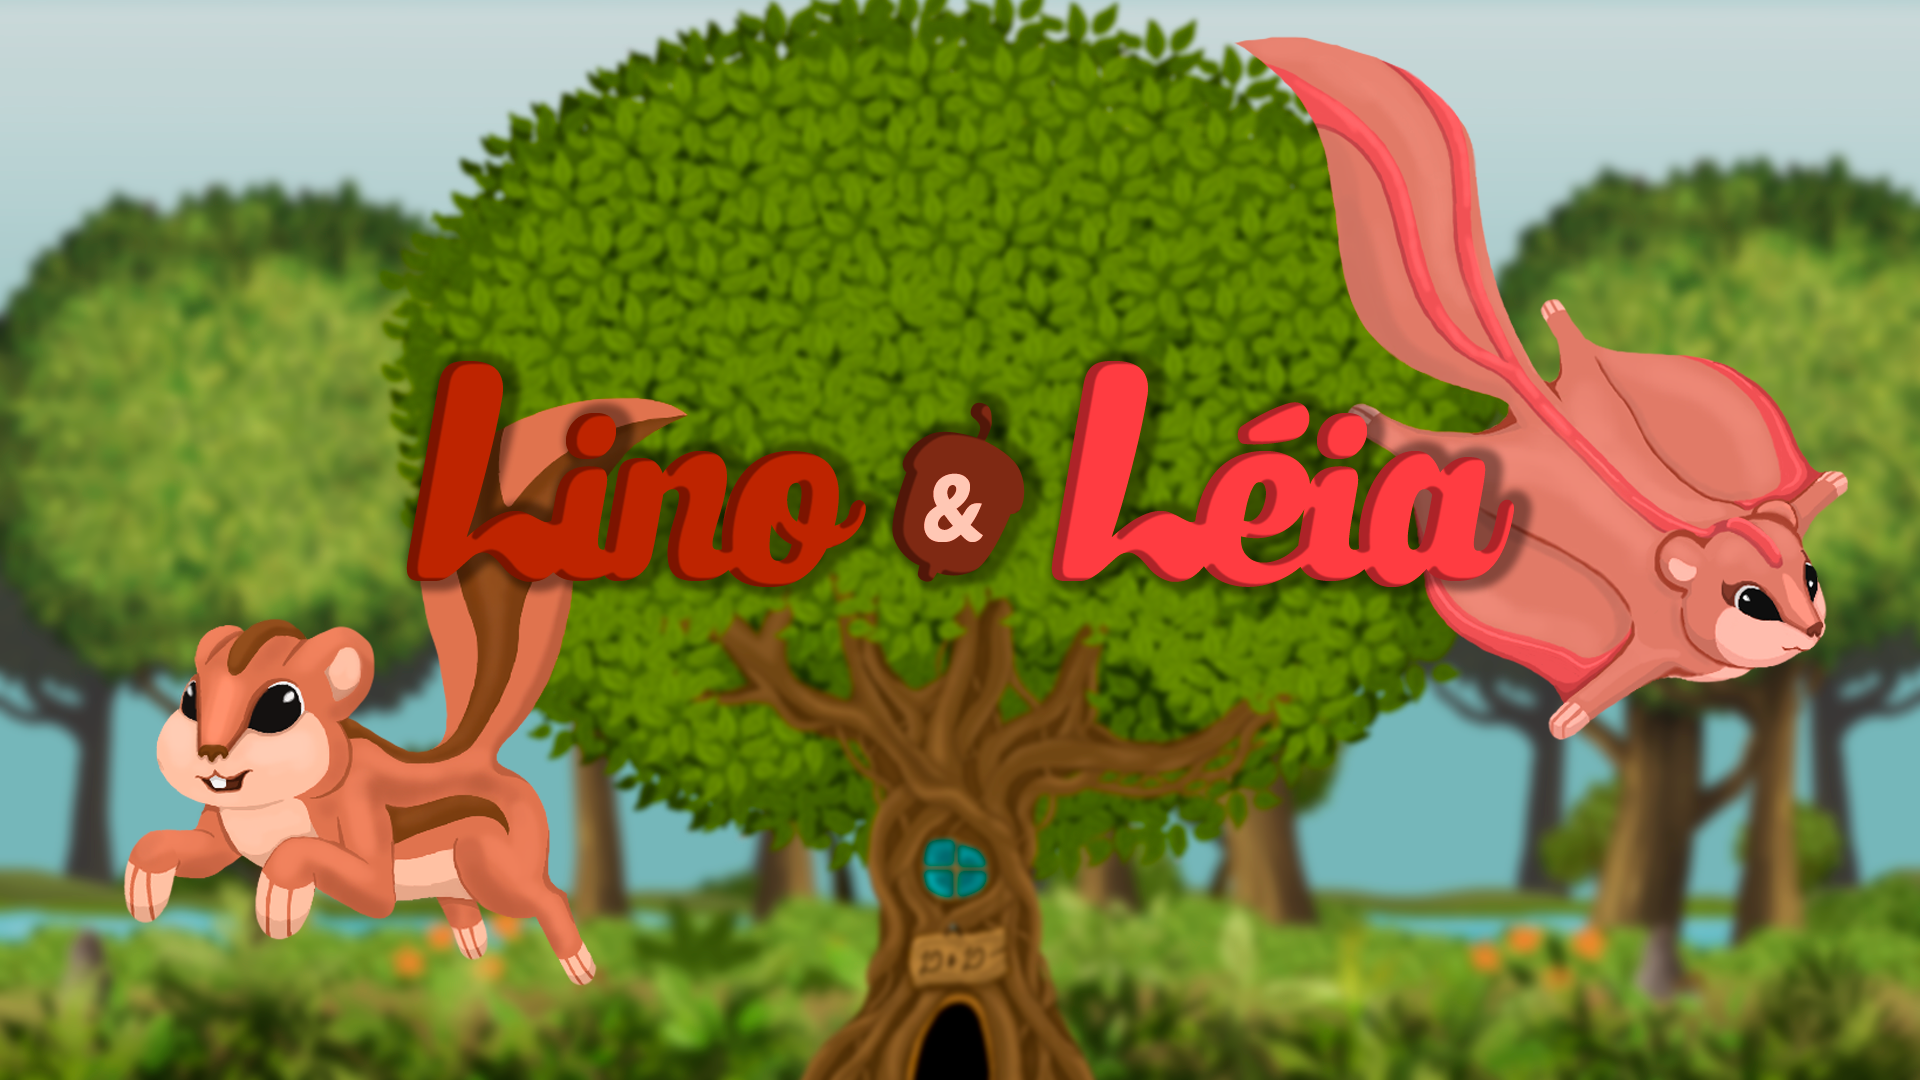 Lino & Léia